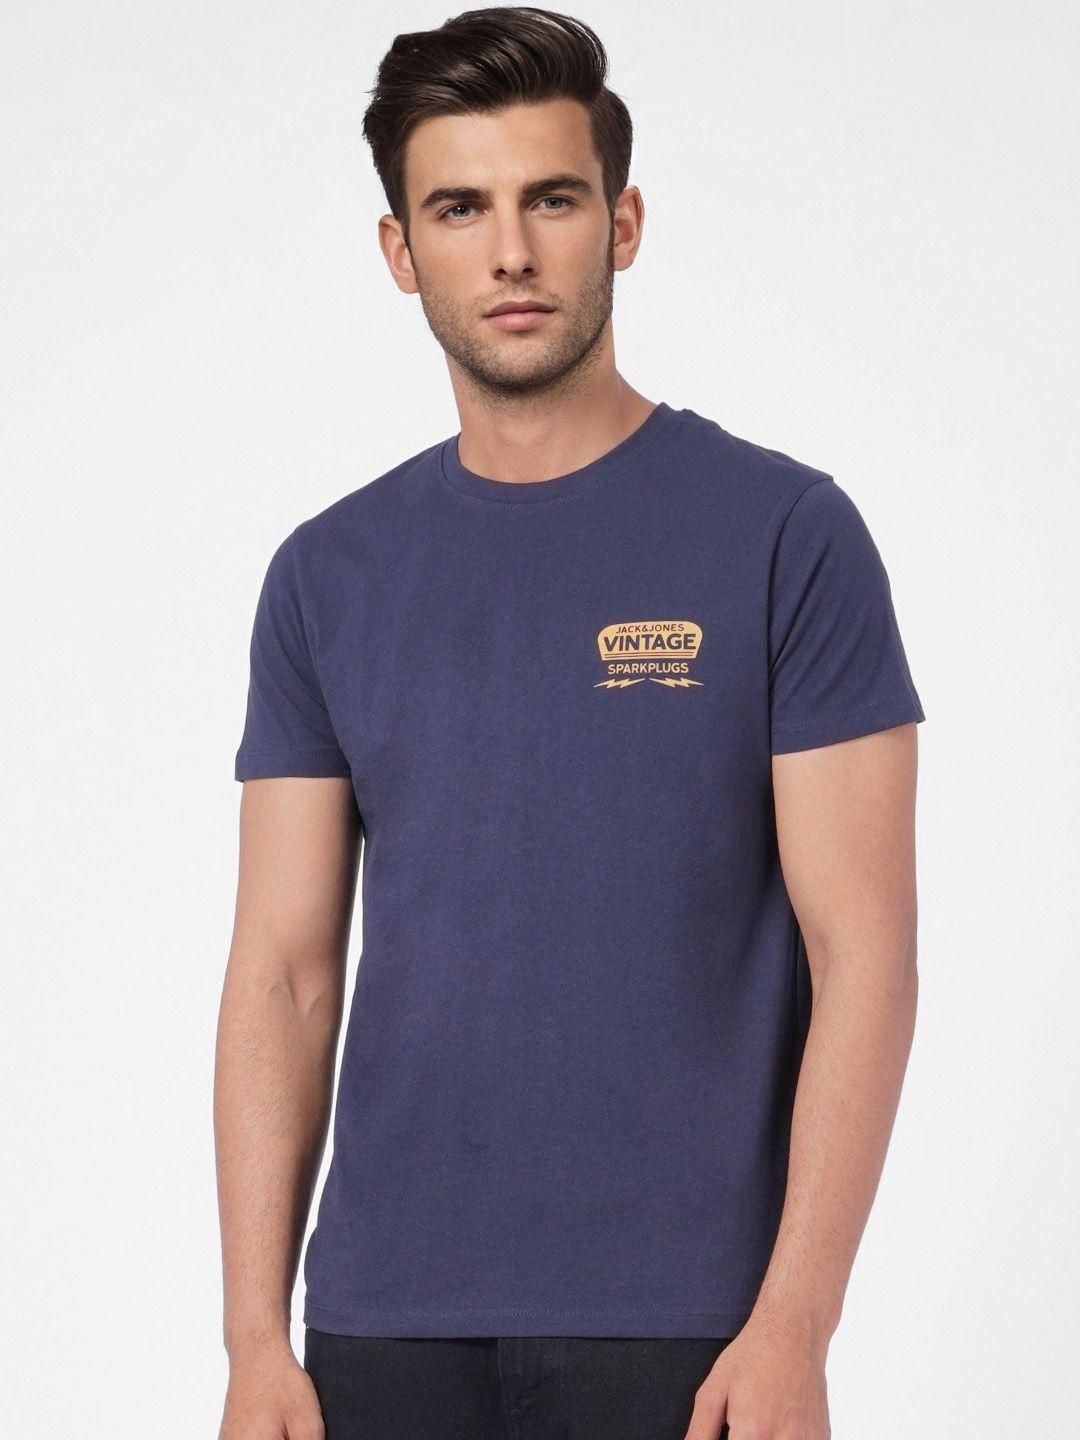 jack & jones men navy blue brand logo printed pure cotton t-shirt